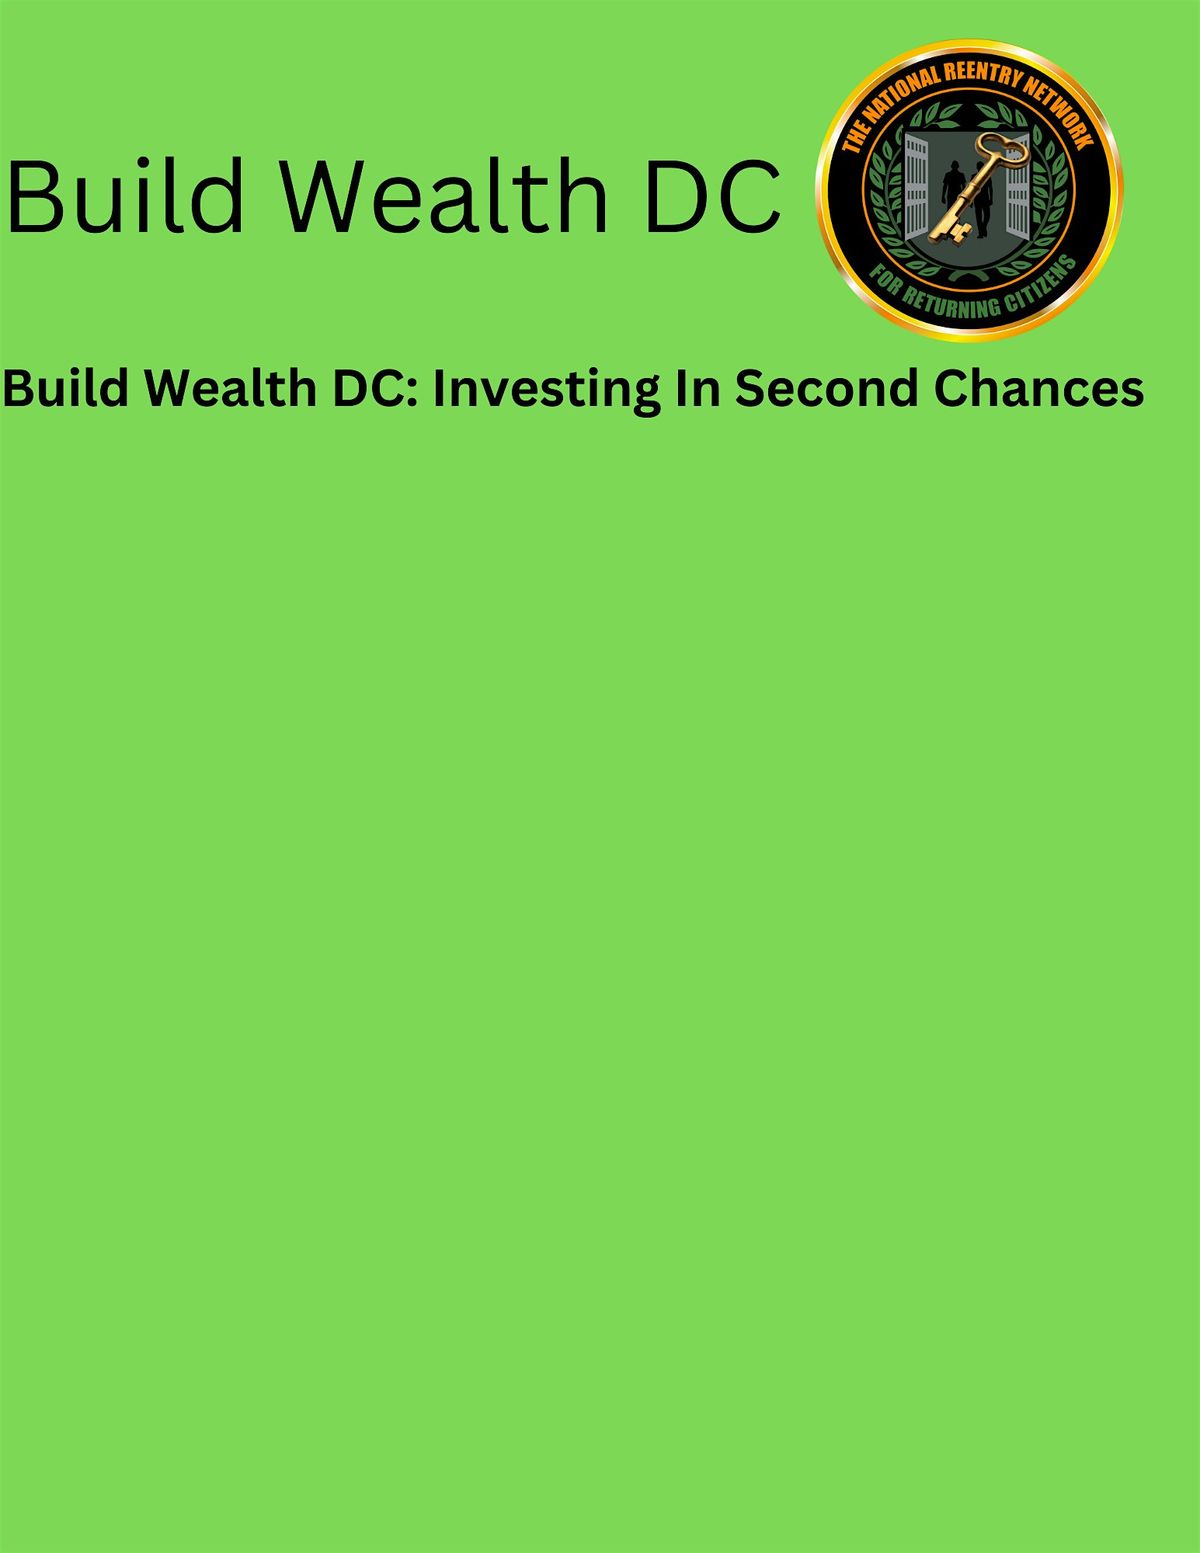 Build Wealth DC Interest Meeting